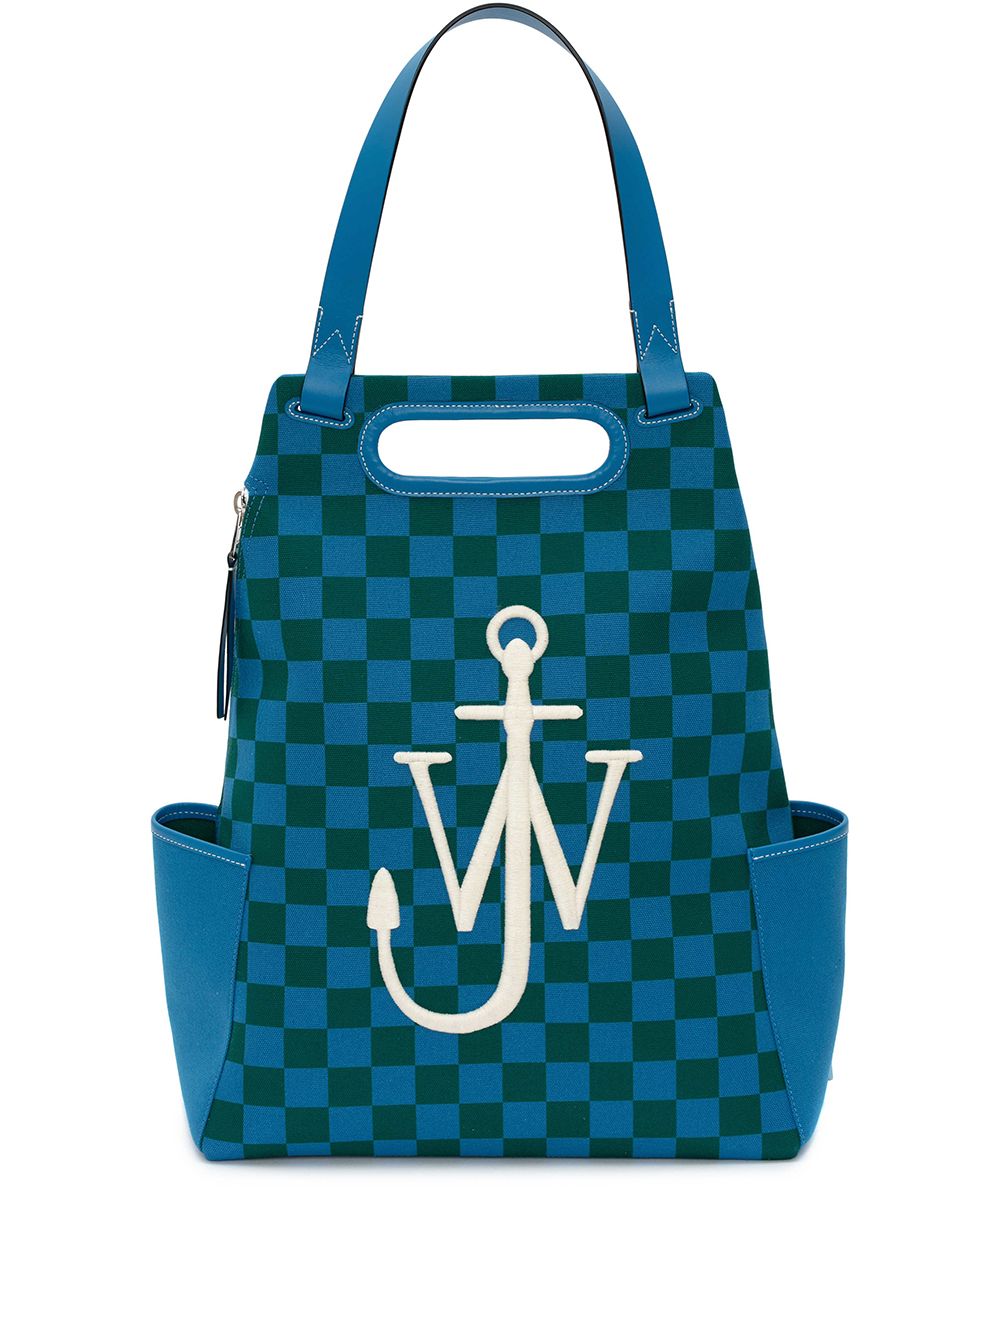 фото Jw anderson клетчатый рюкзак с логотипом anchor